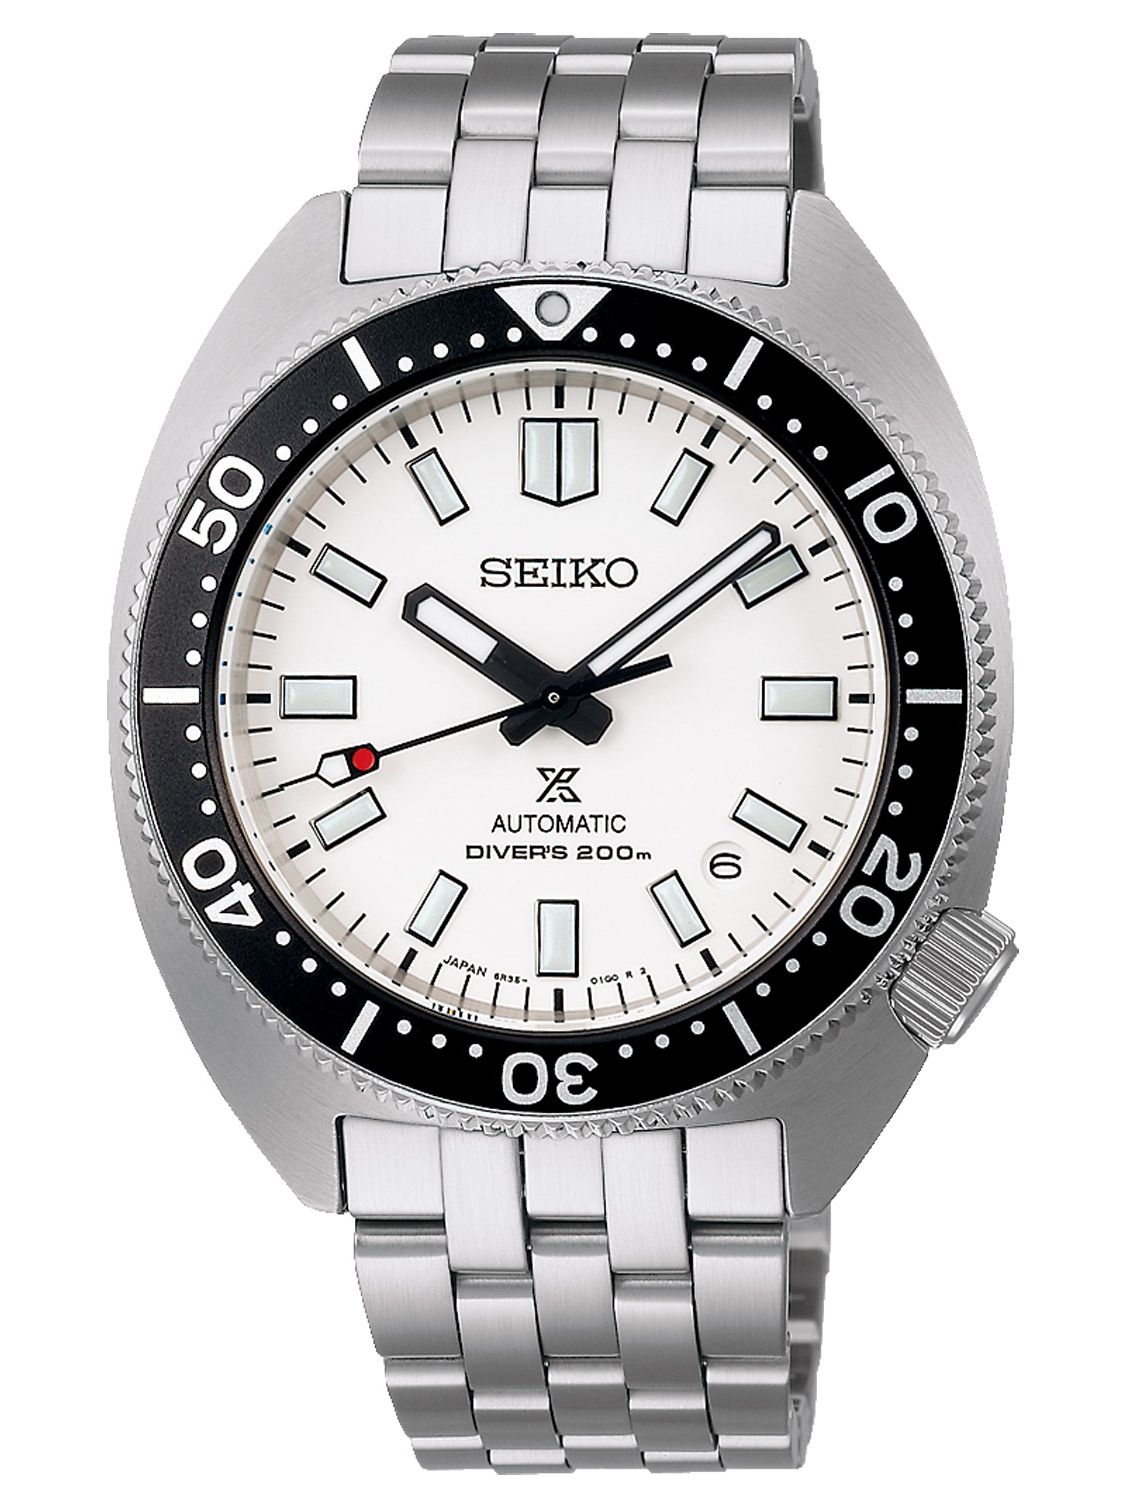 Seiko SPB313J1 Prospex Sea Automatic Men's Watch White